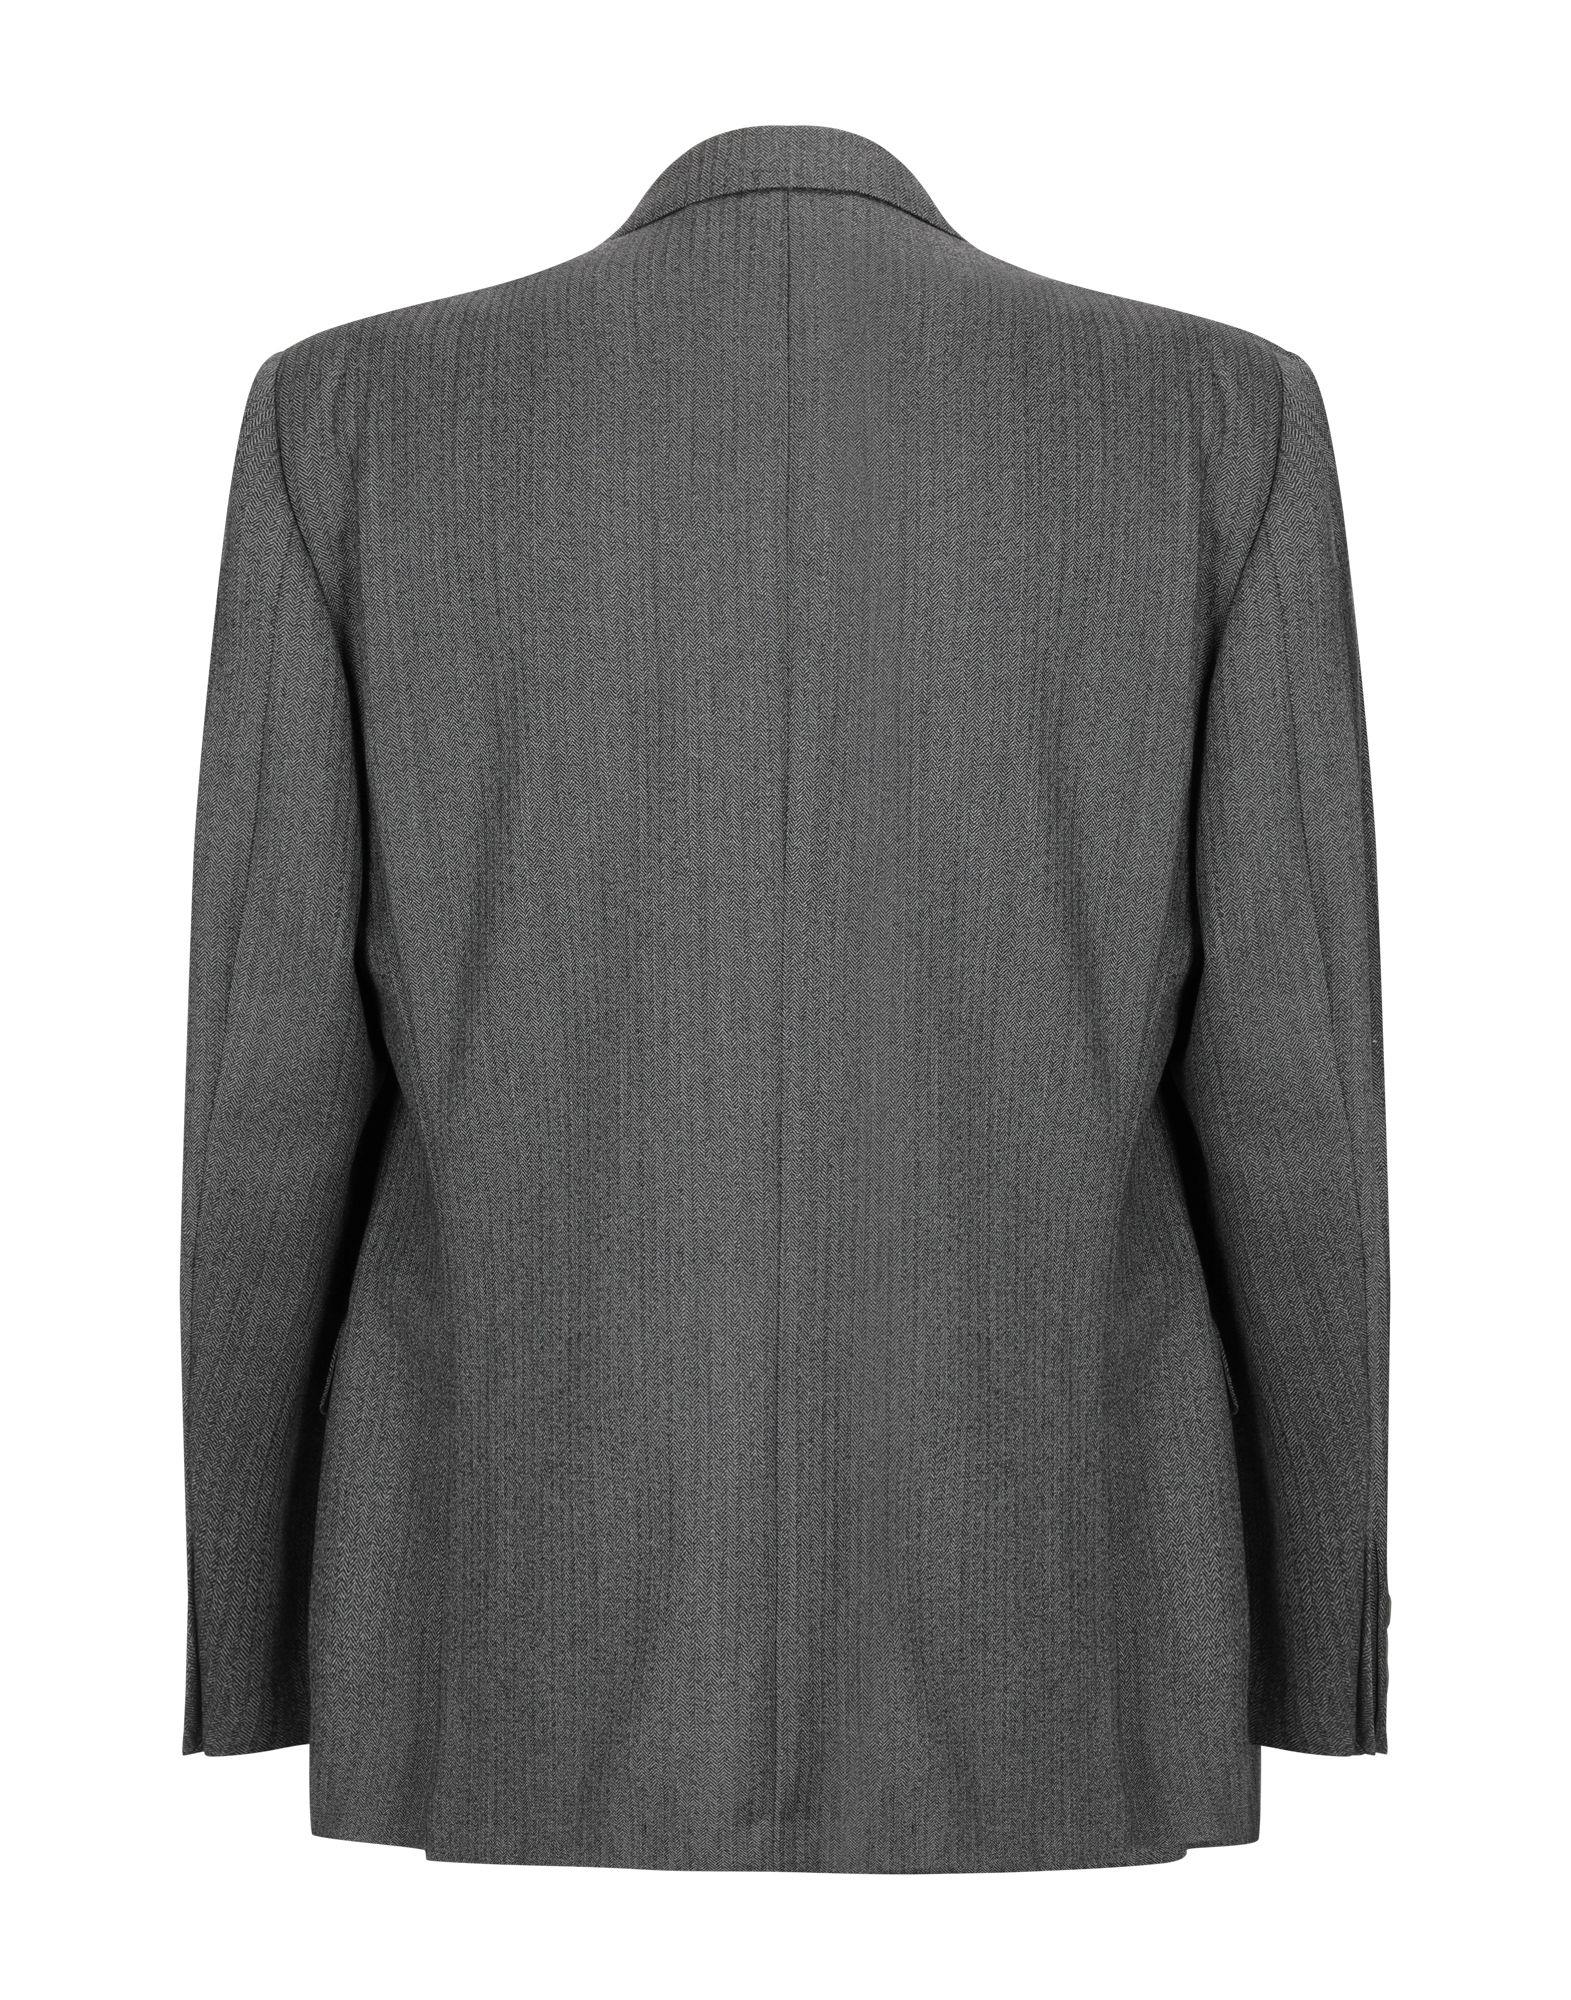 Aquascutum Flannel Blazer in Gray for Men - Lyst